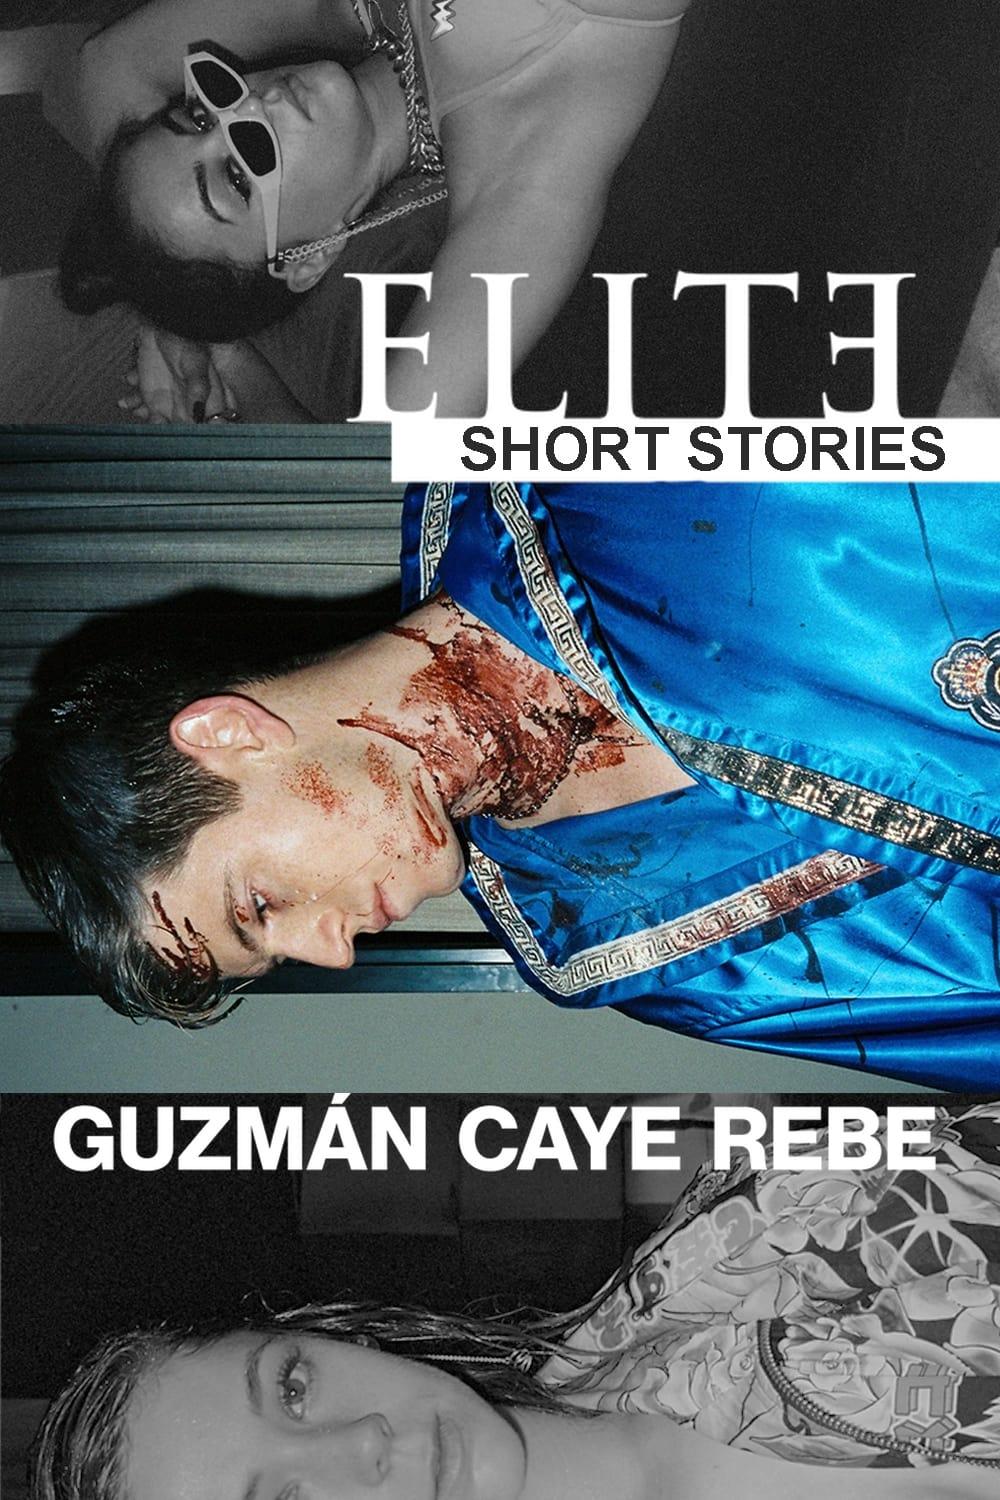 Elite Short Stories: Guzmán Caye Rebe poster